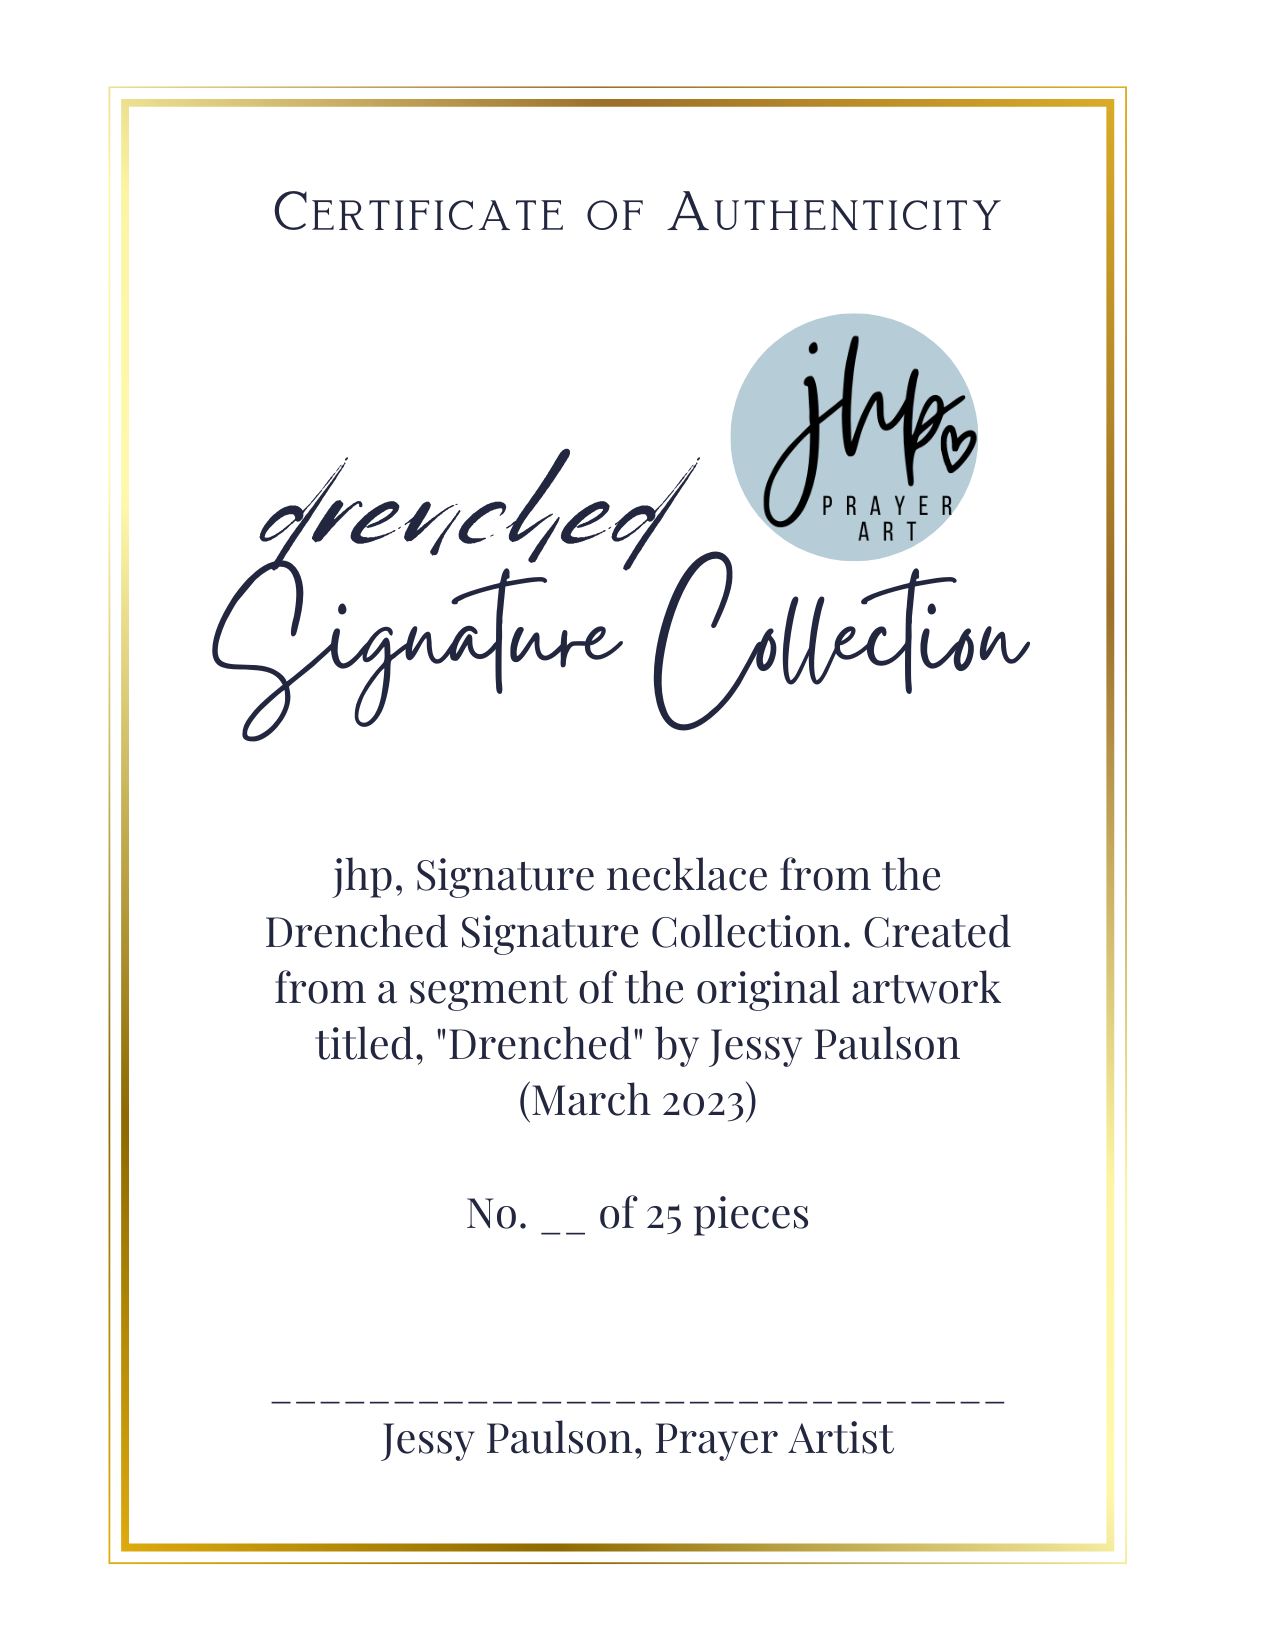 Drenched, a jhp Signature Necklace XIX